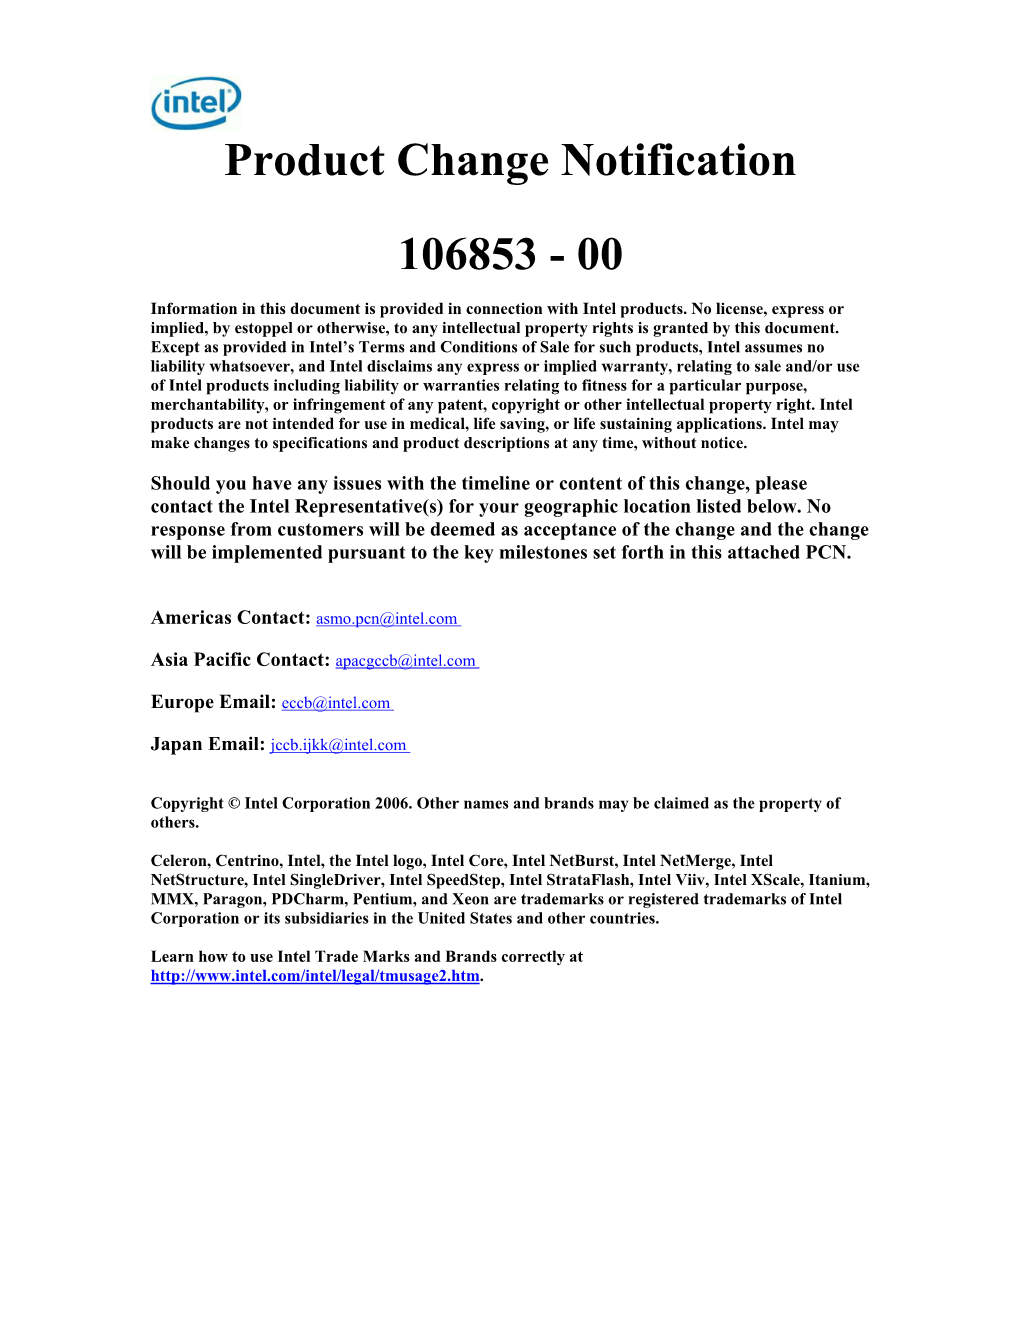 Product Change Notification 106853